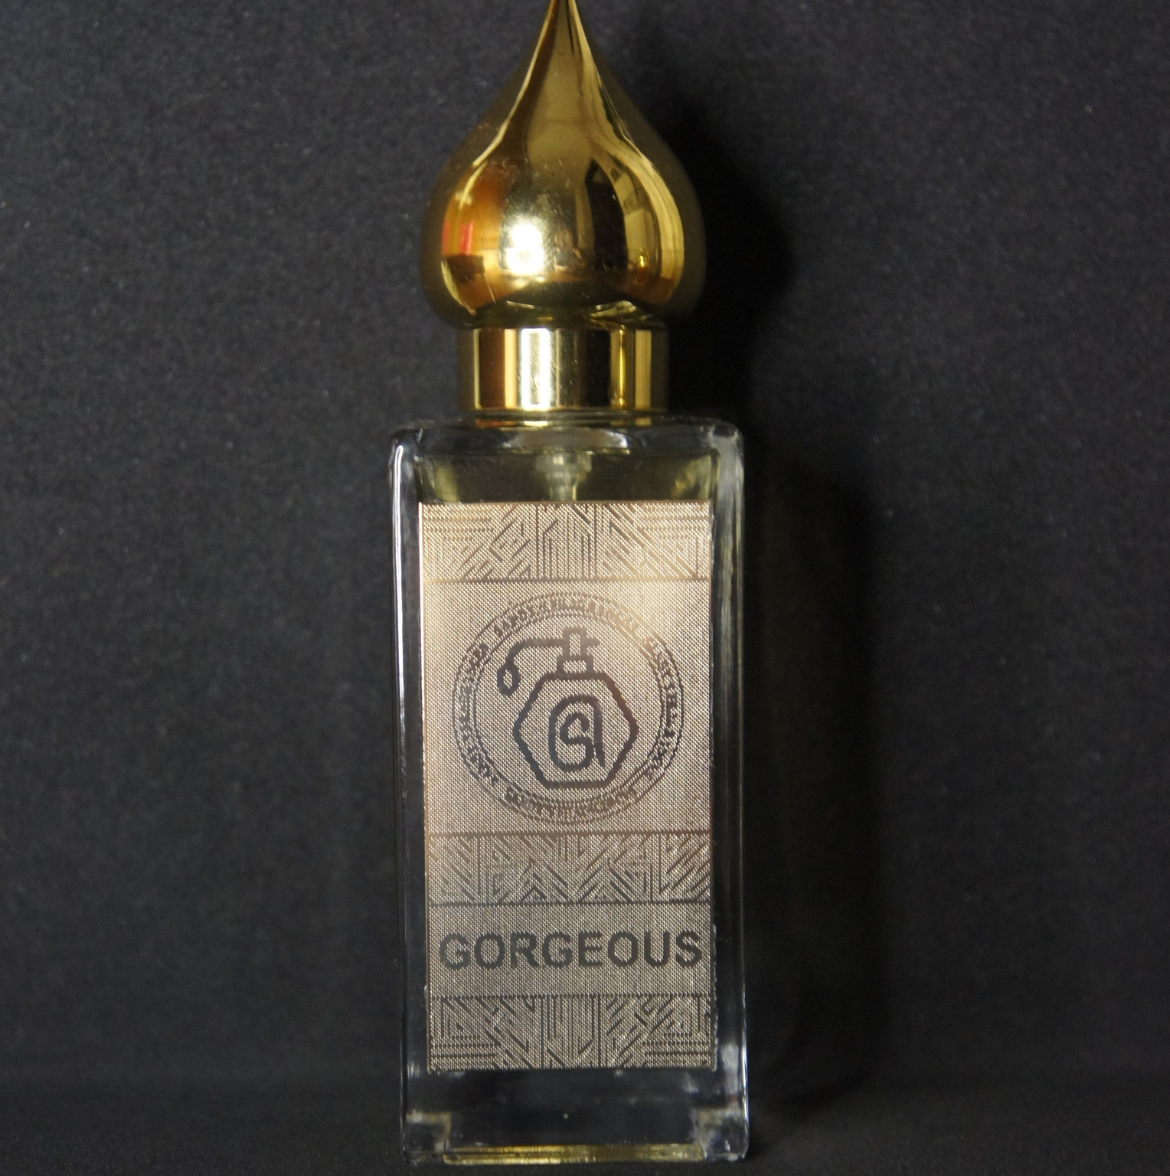 Gorgeous Perfume by Sandy’s fragrance